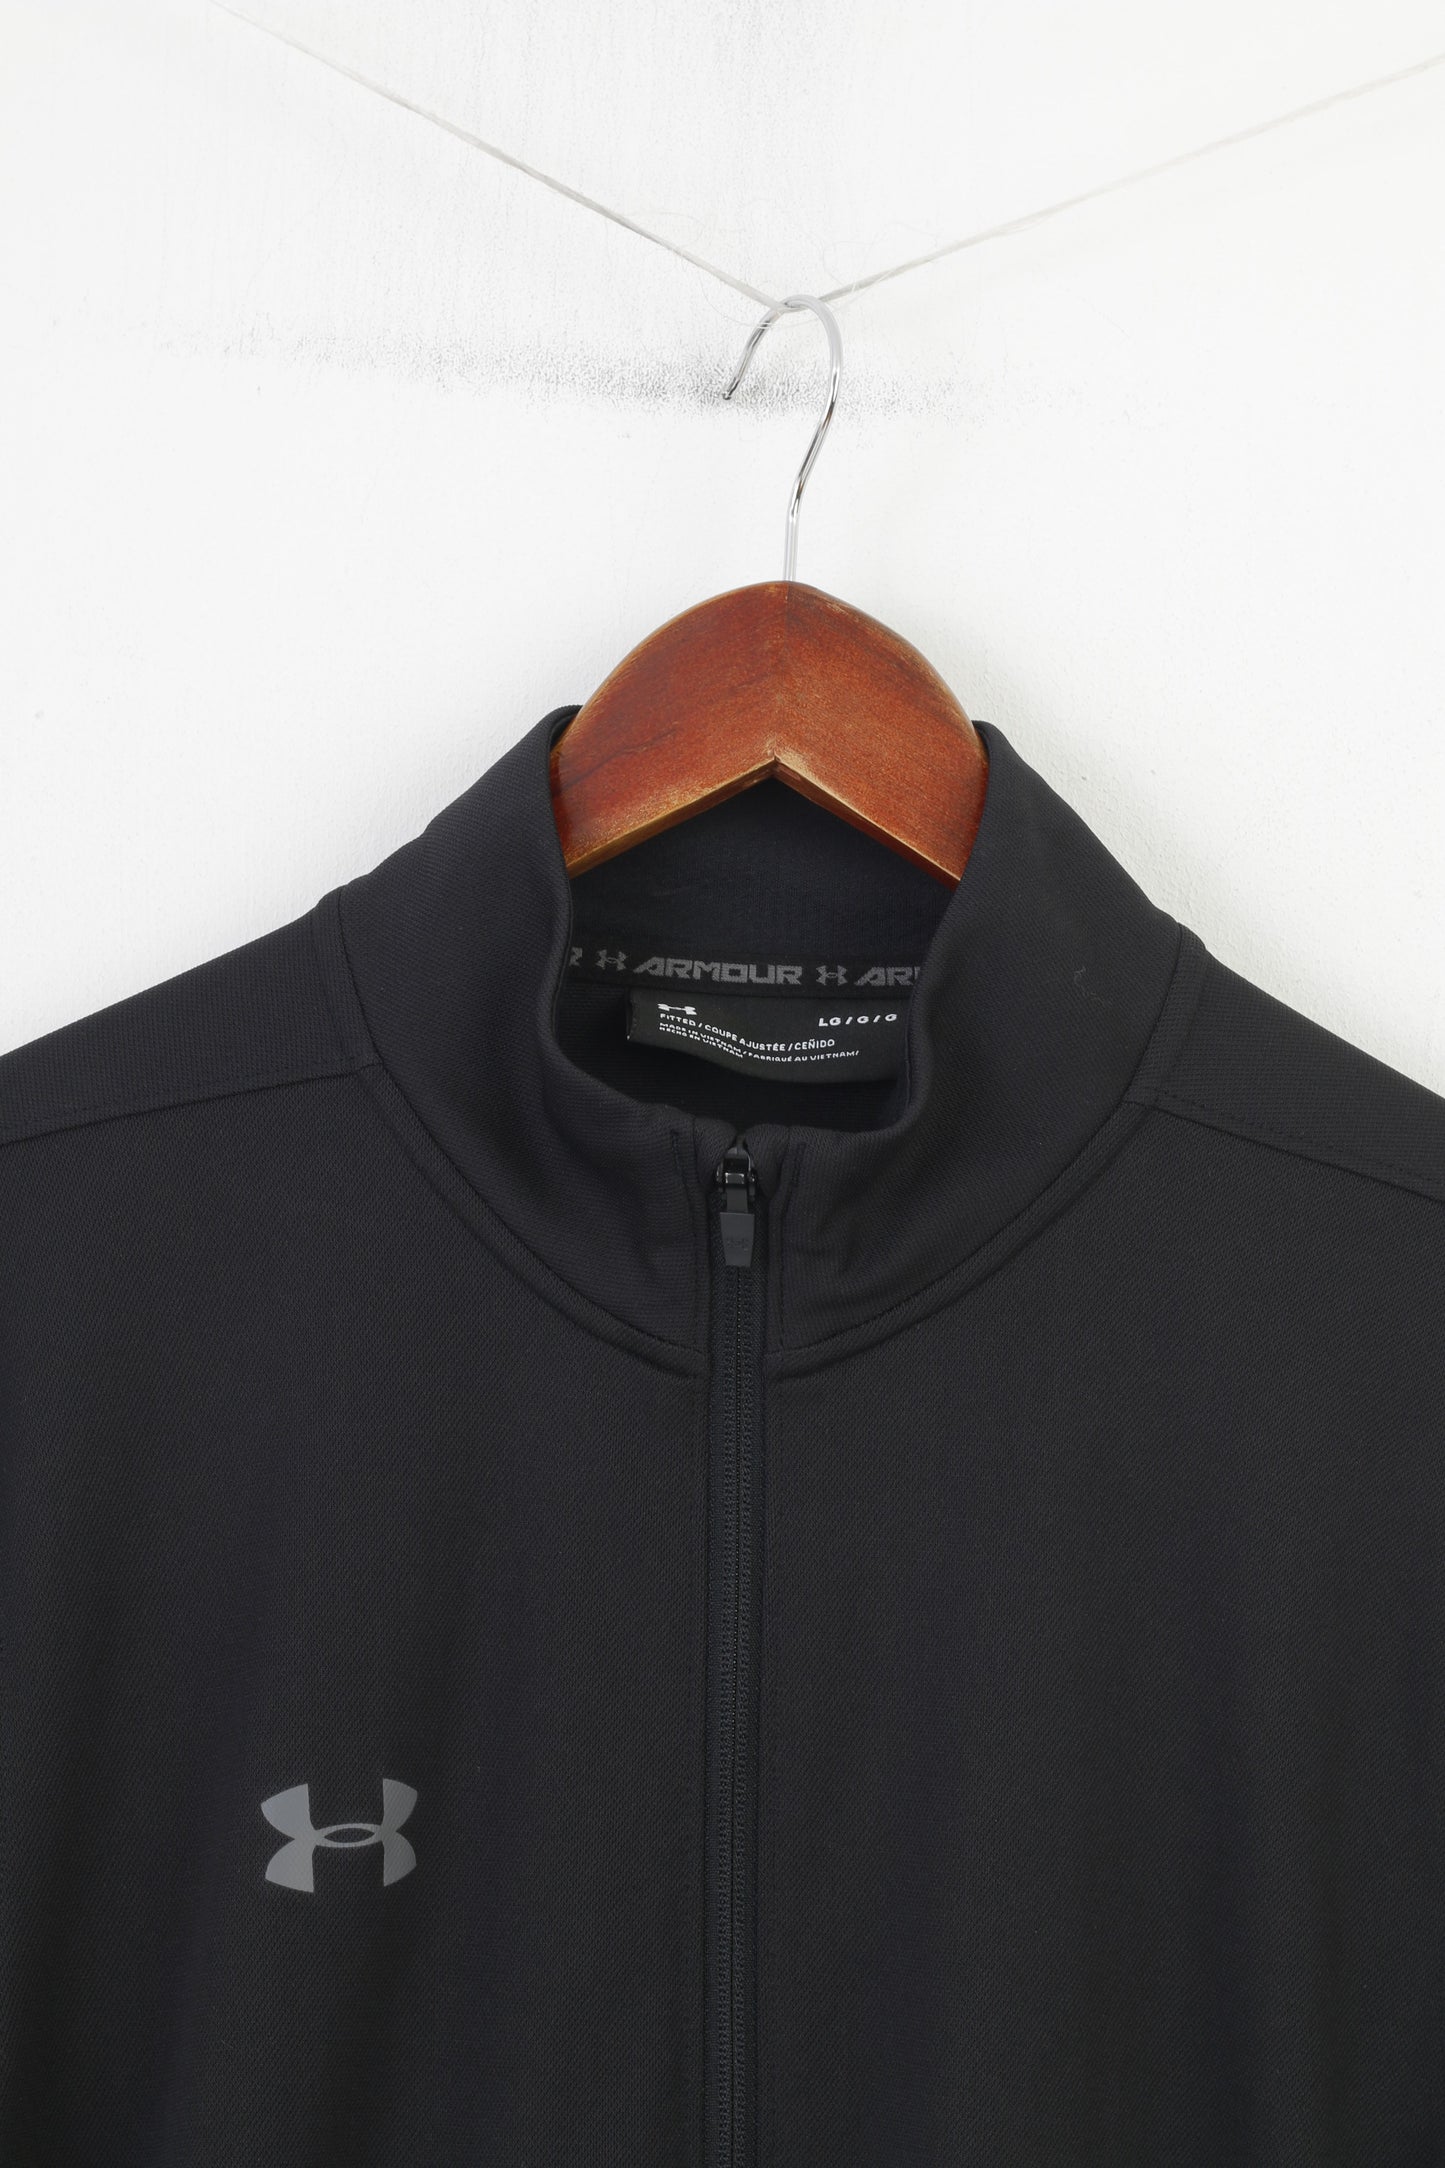 Under Armour Men L Sweatshirt Noir Full Zipper Ajusté Sport Collar Top